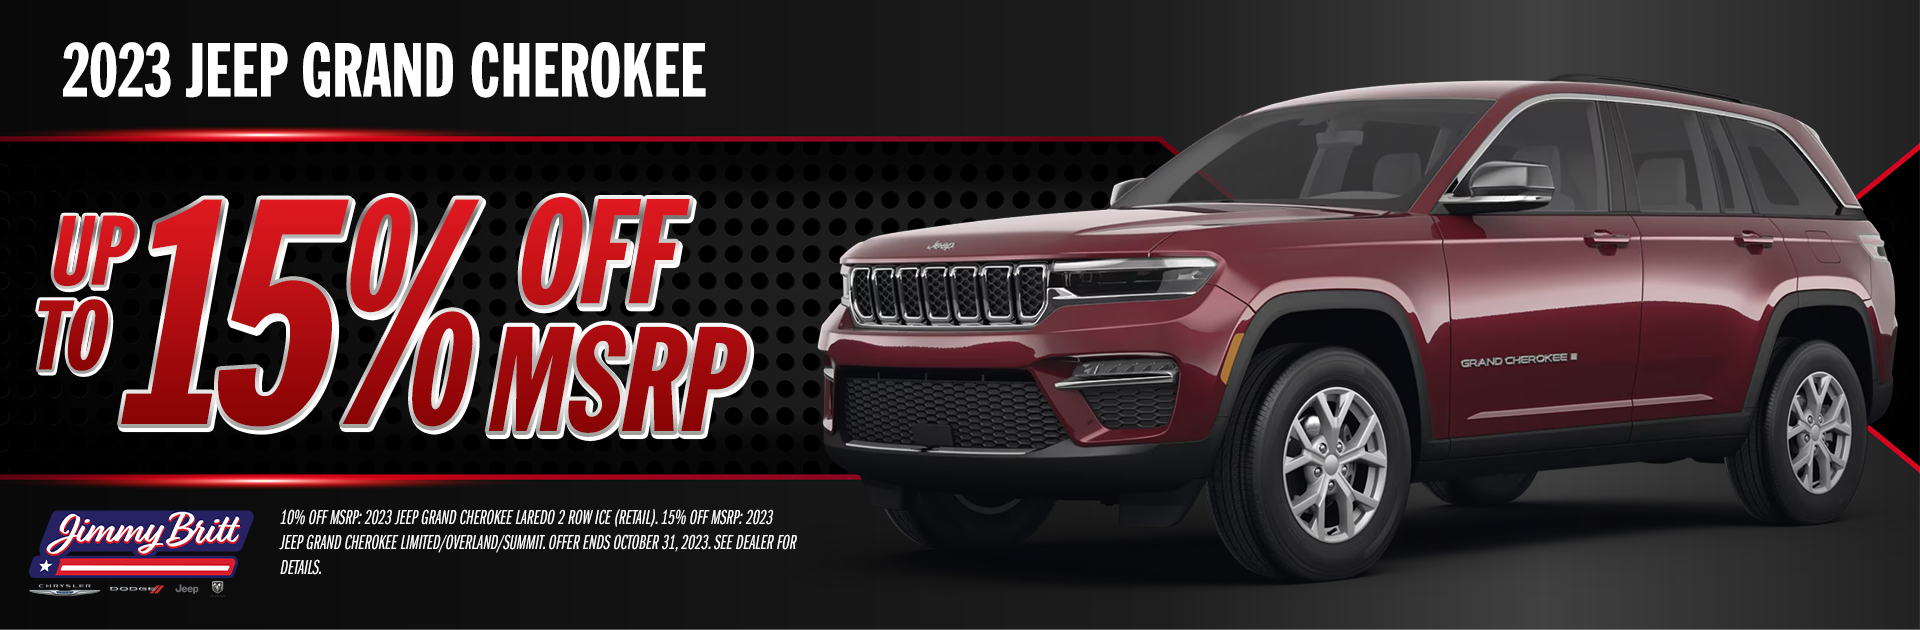 2023 Jeep Grand Cherokee Lease for $409 per month for 24 months or $4000 Bonus Cash plus $500 Conquest Bonus Cash!